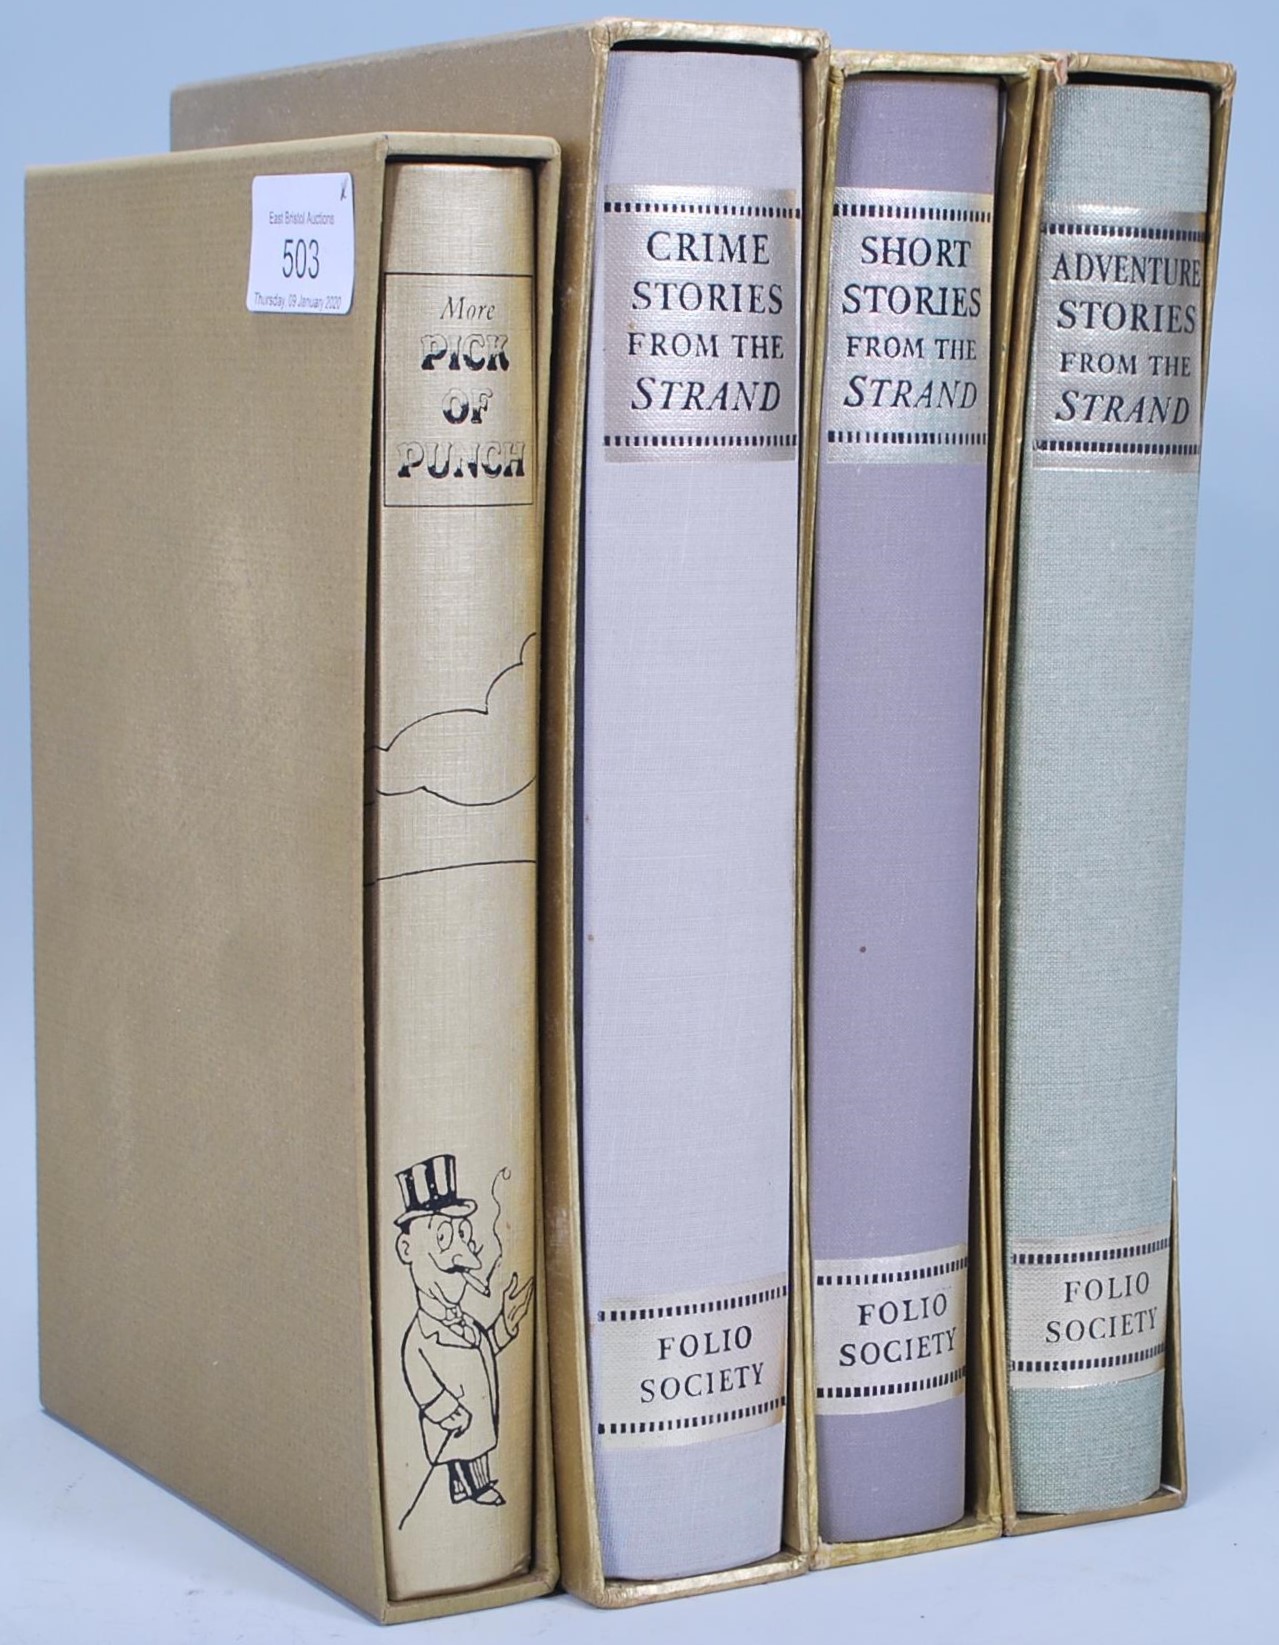 A collection of Folio Society books to include Cri